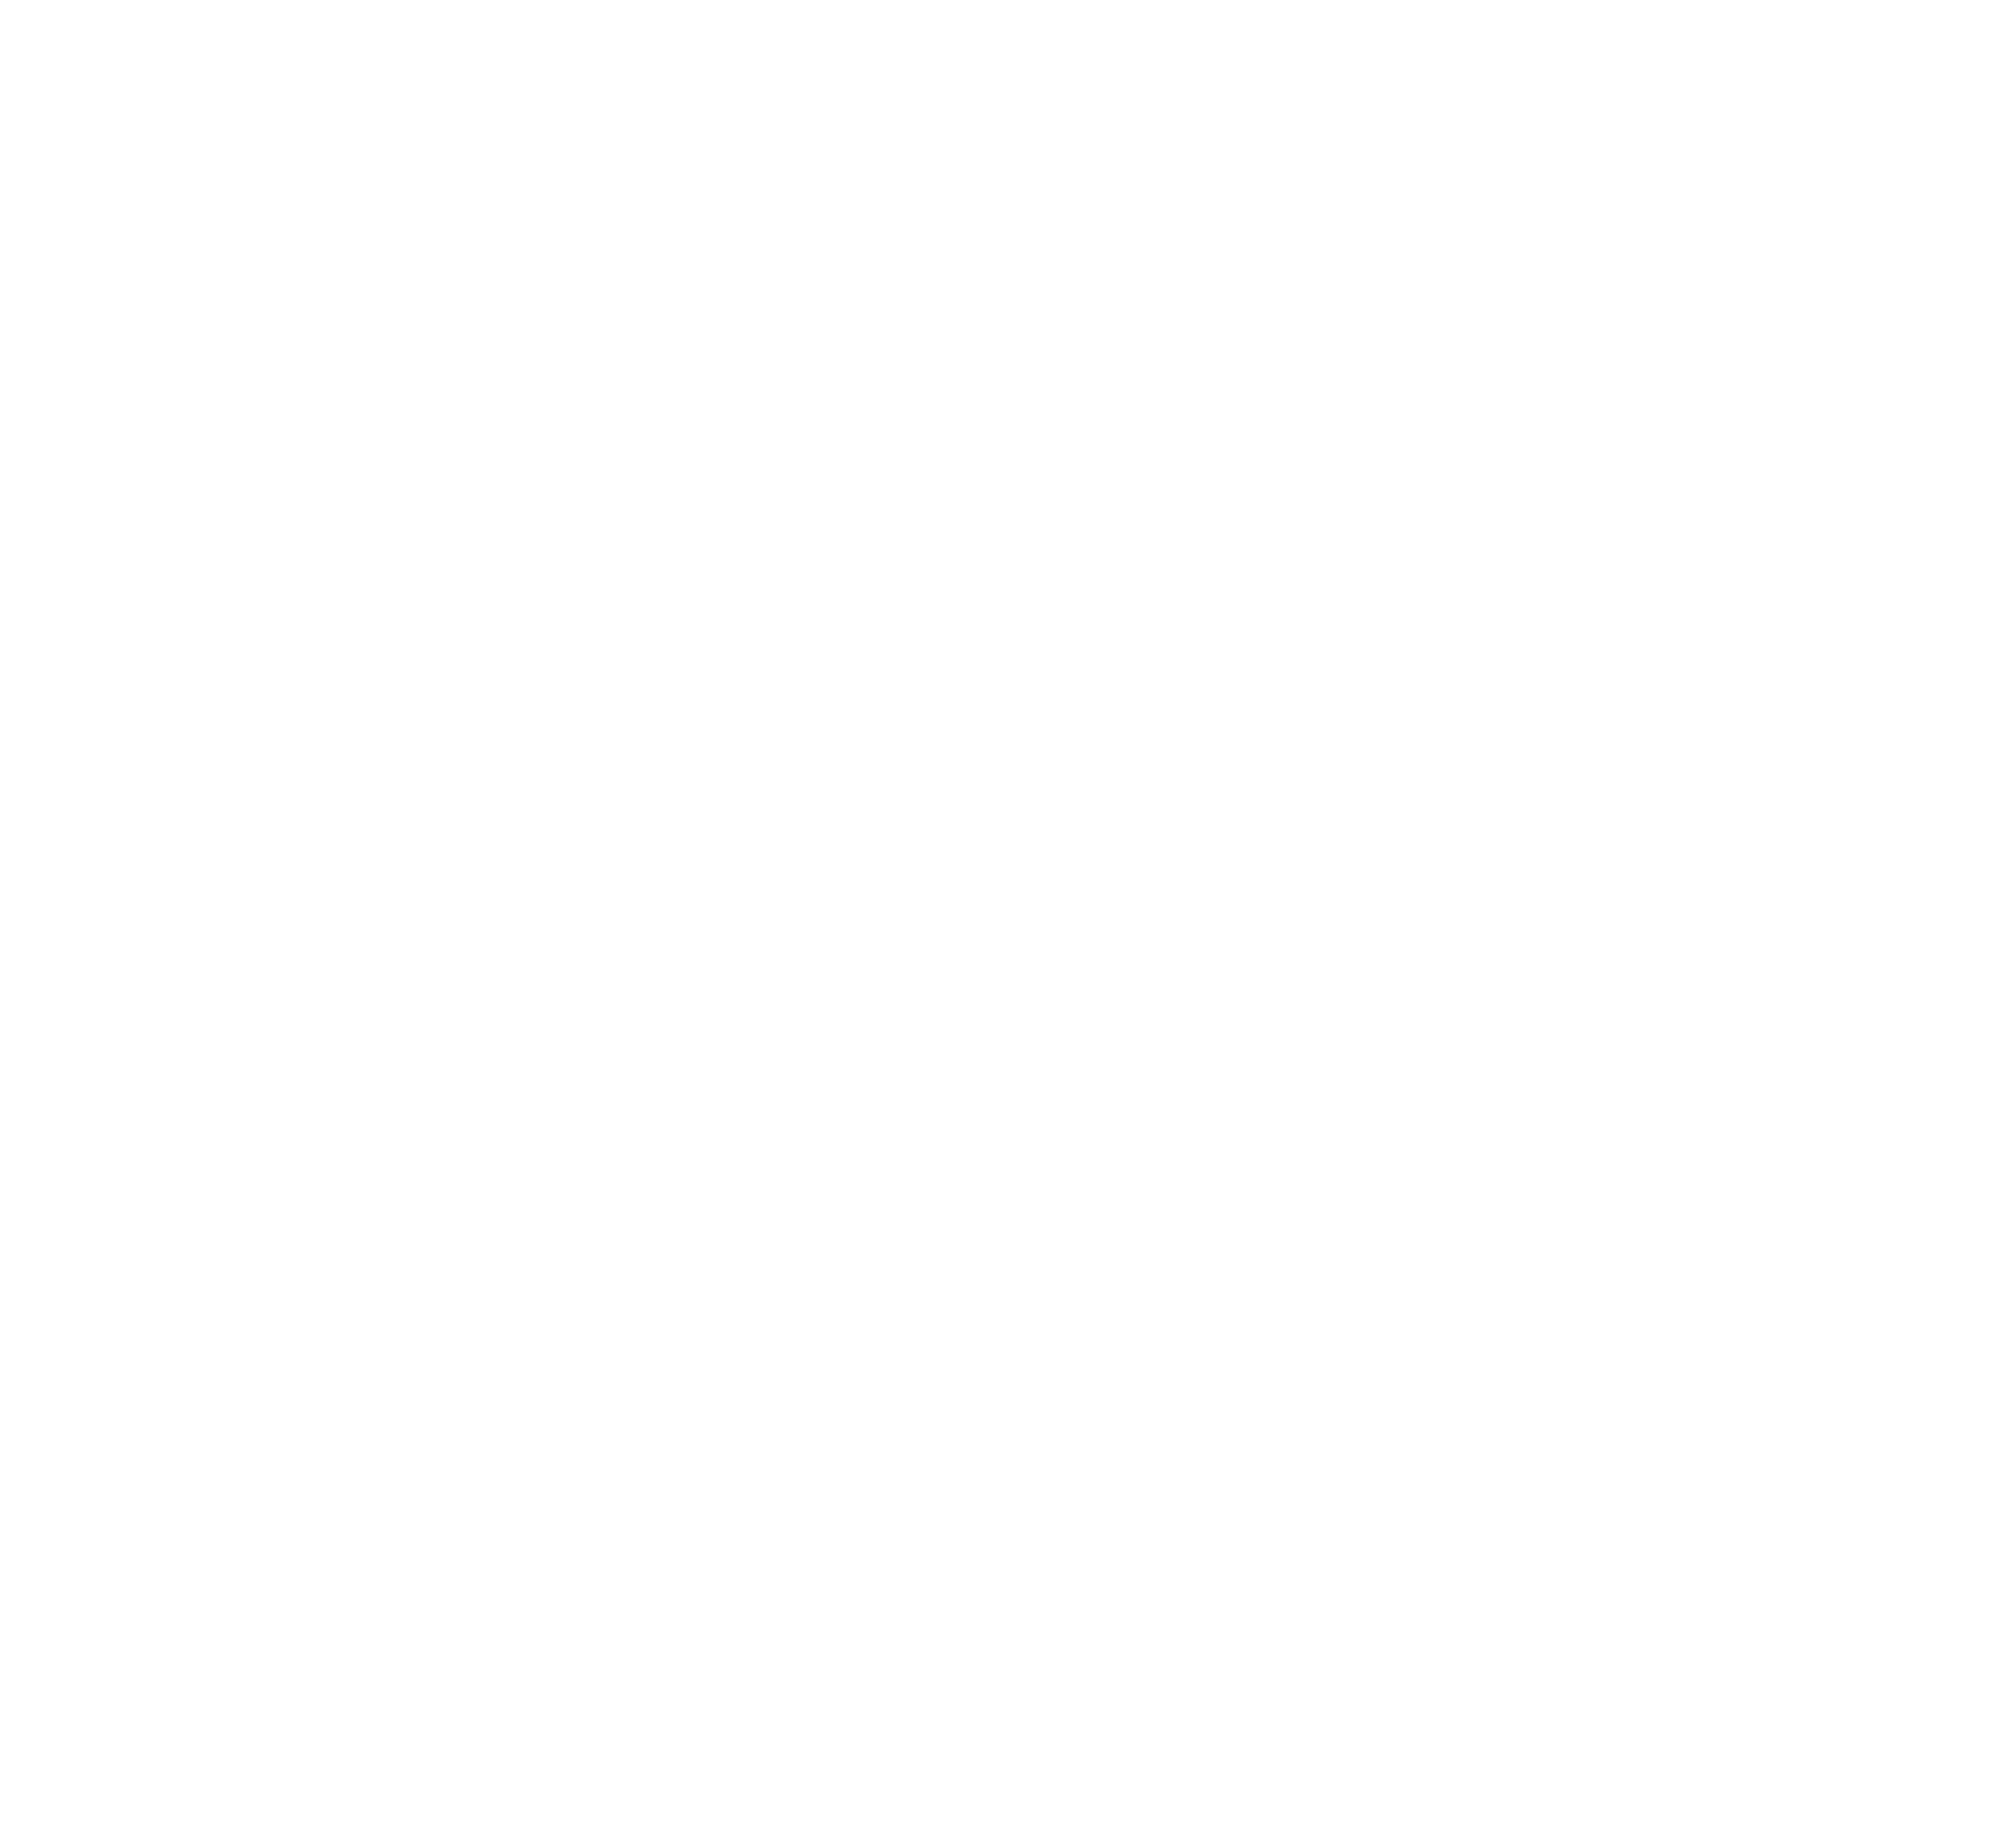 jaceocrypto